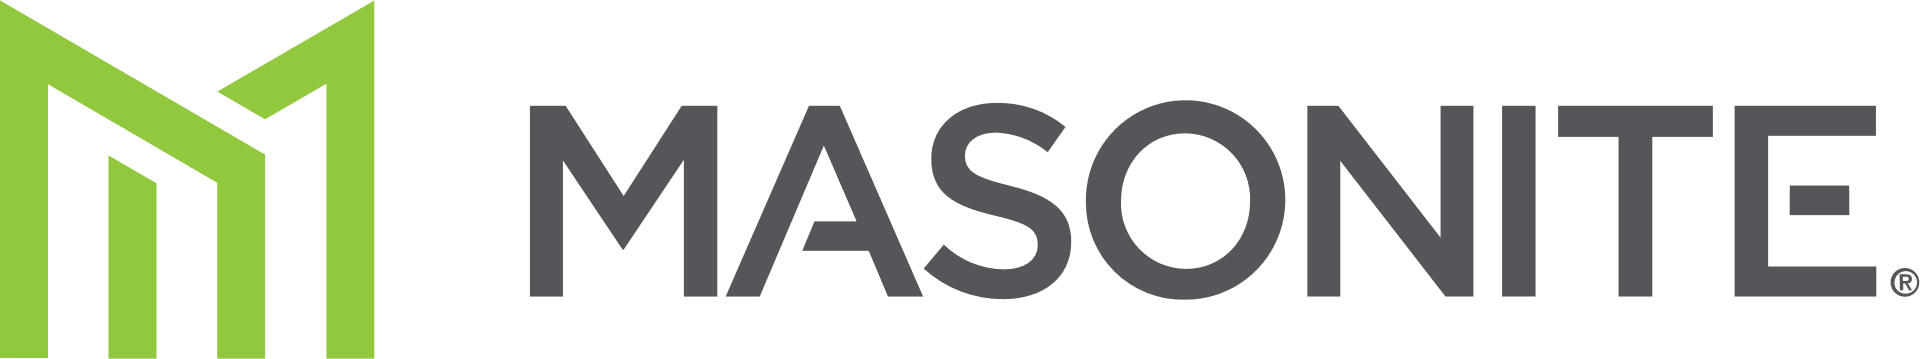 masonite-logo.png